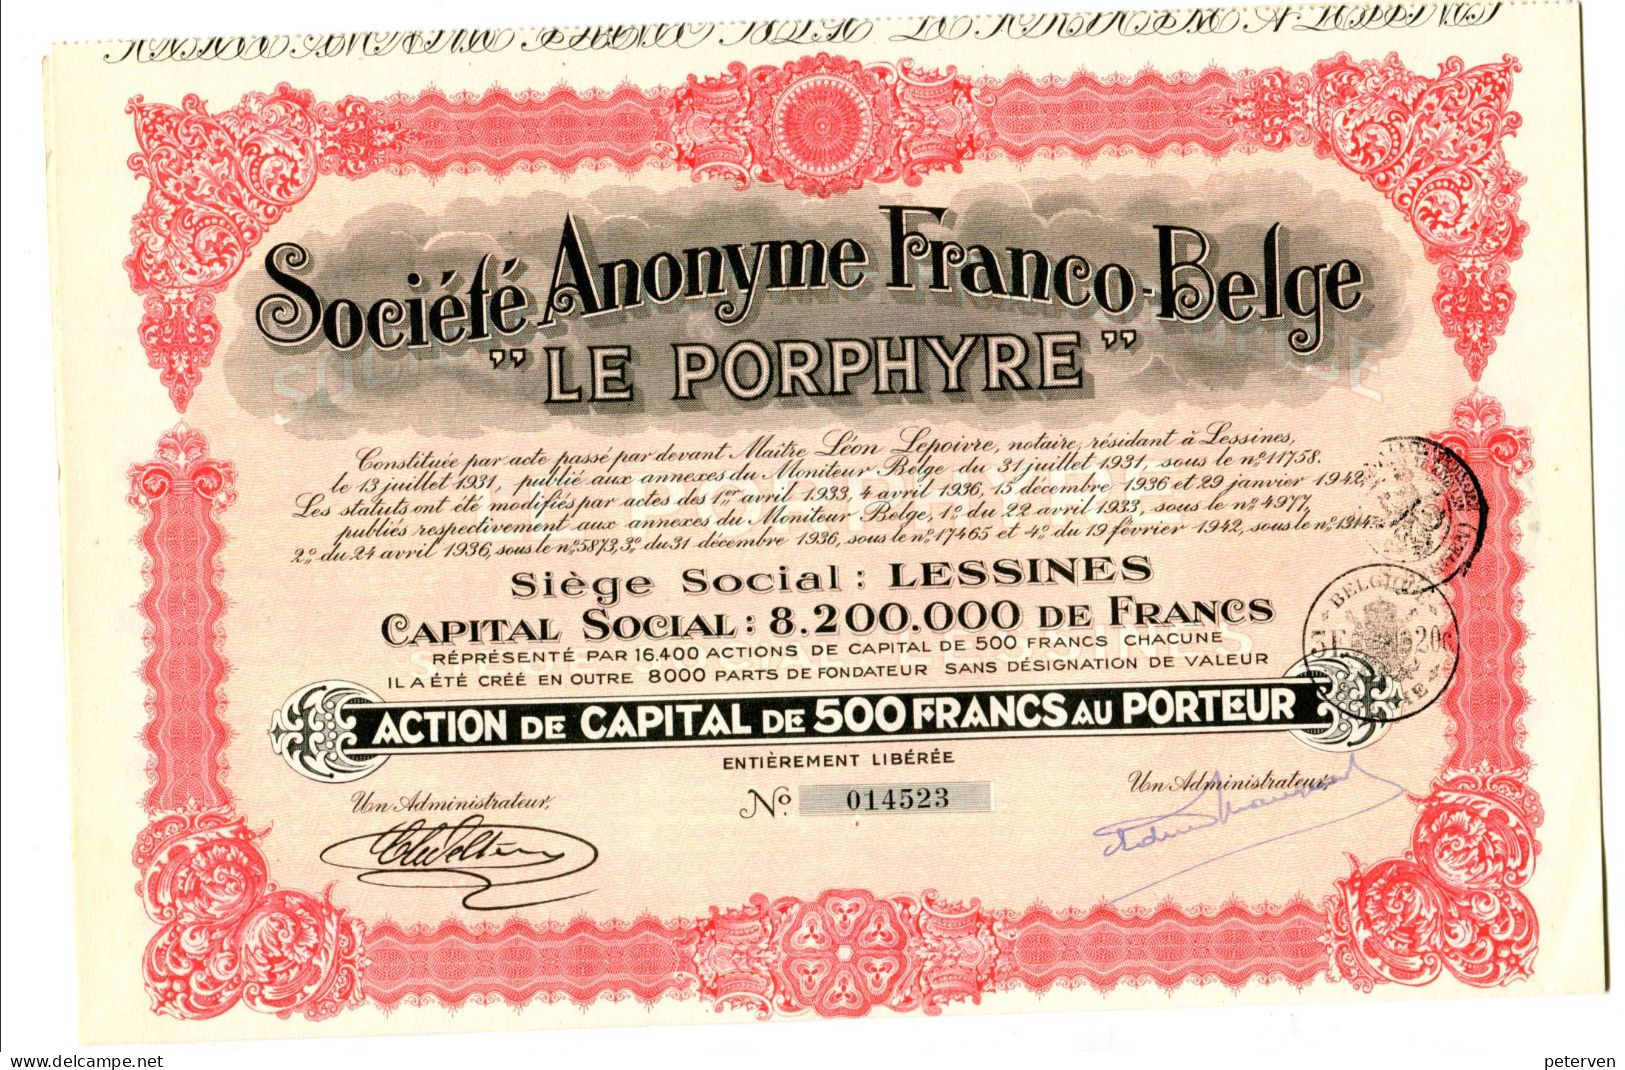 "LE PORPHYRE" - S.A.Franco-Belge - Mineral